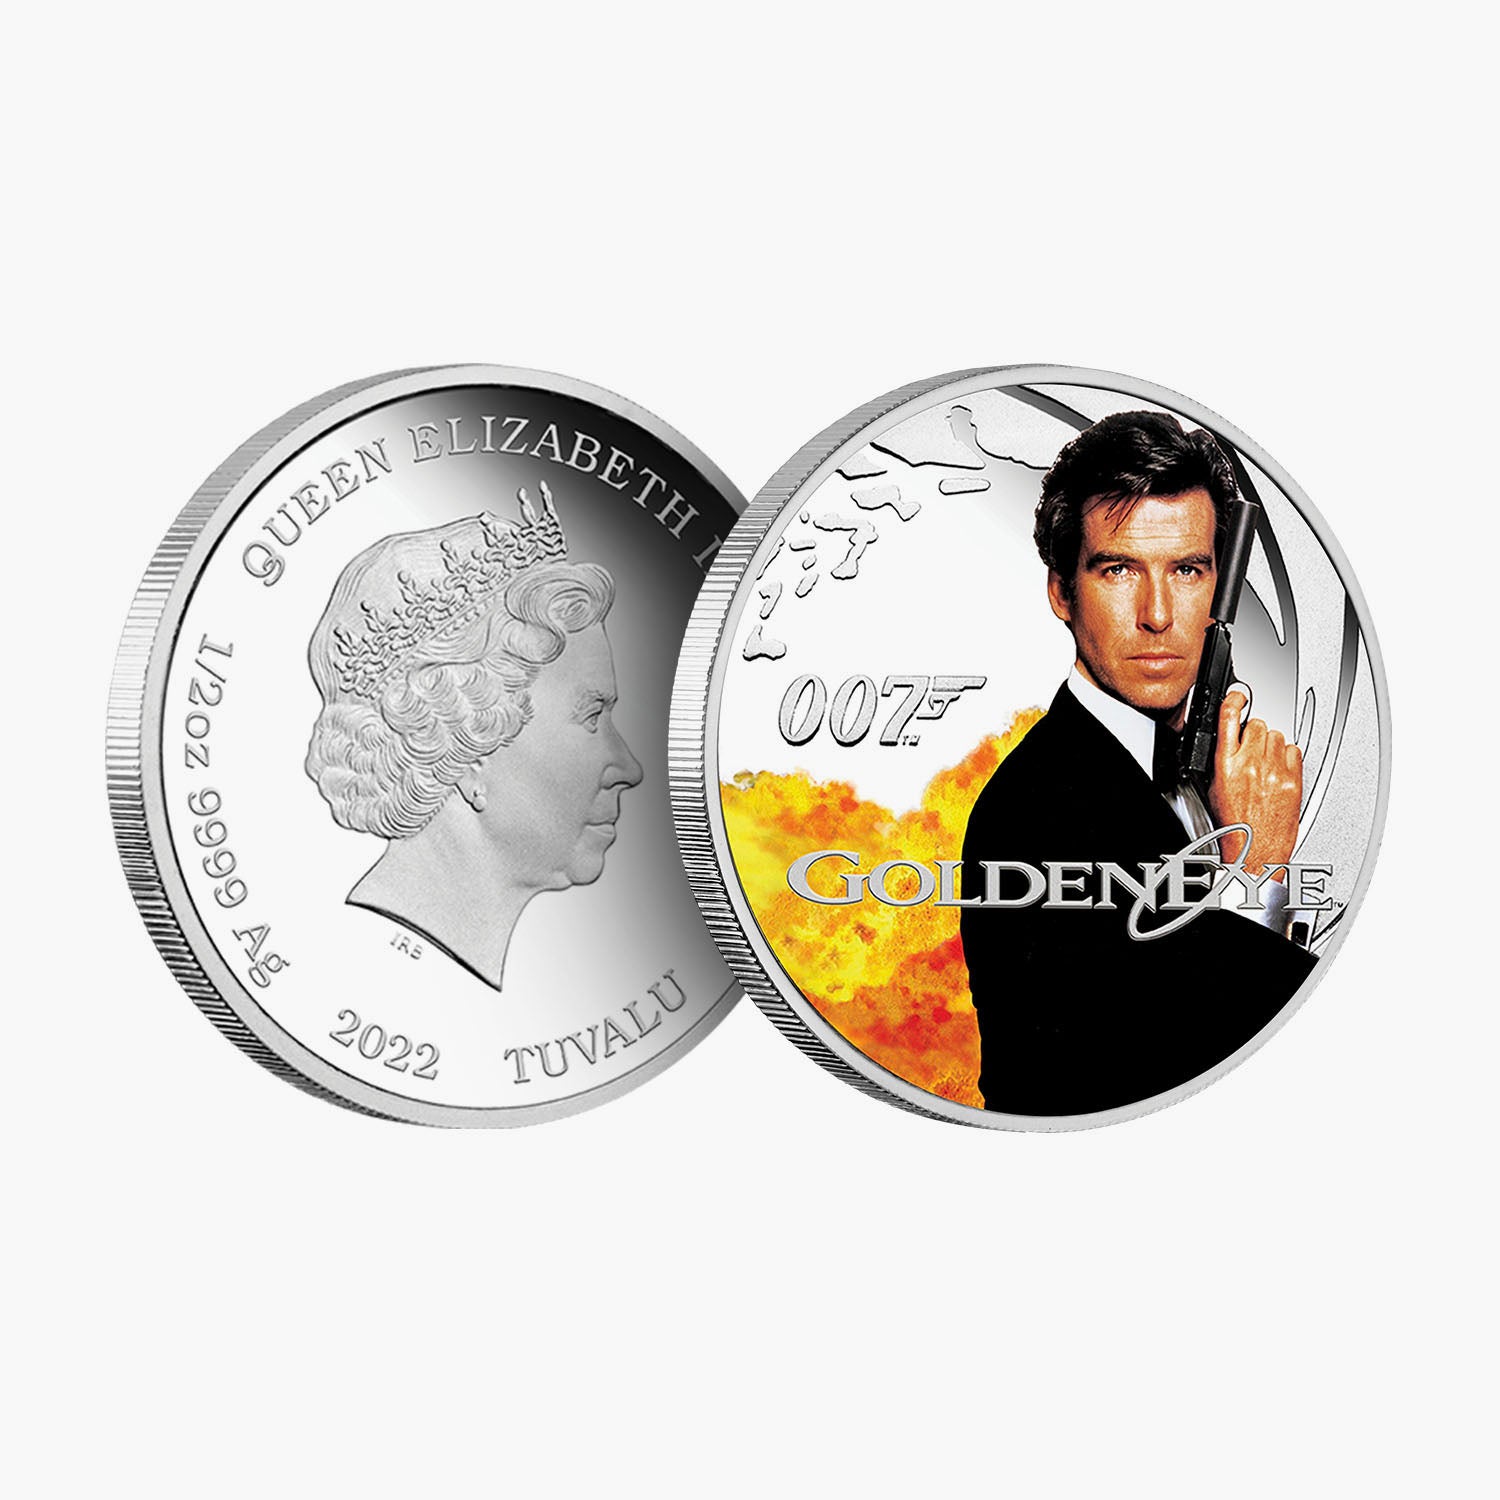 James Bond - Golden Eye Solid Silver Movie Coin